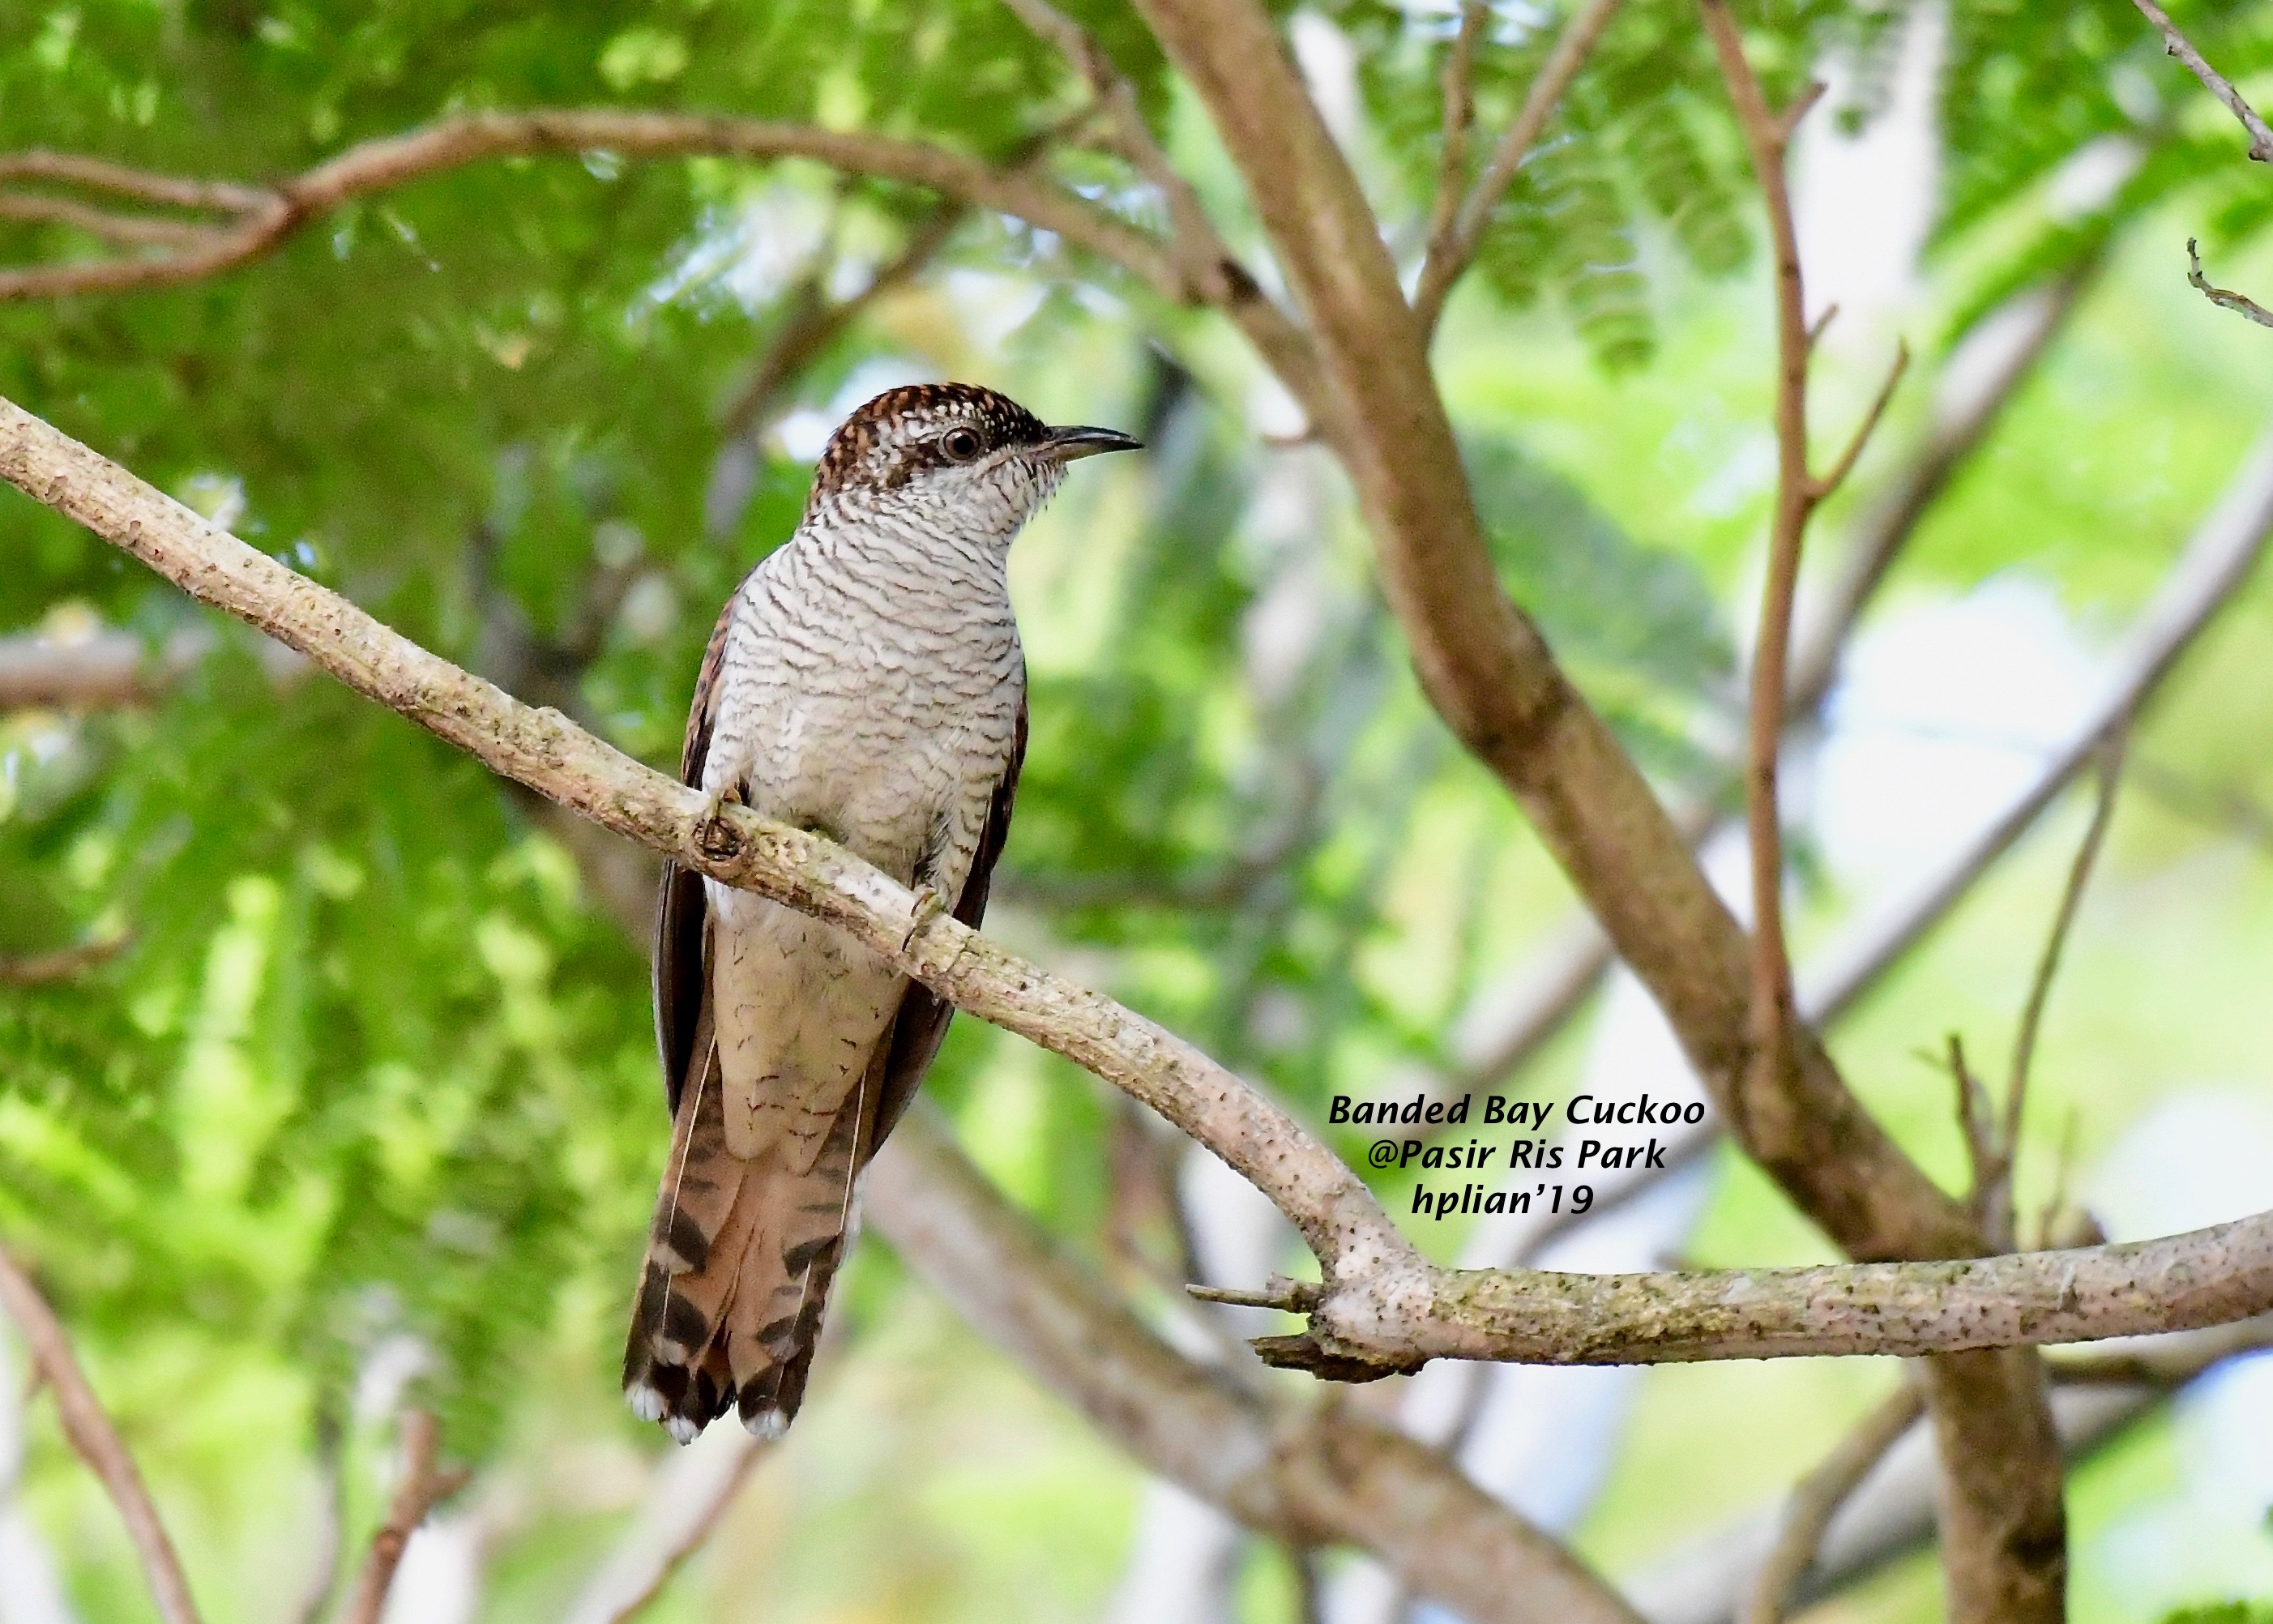 Banded bay cuckoo